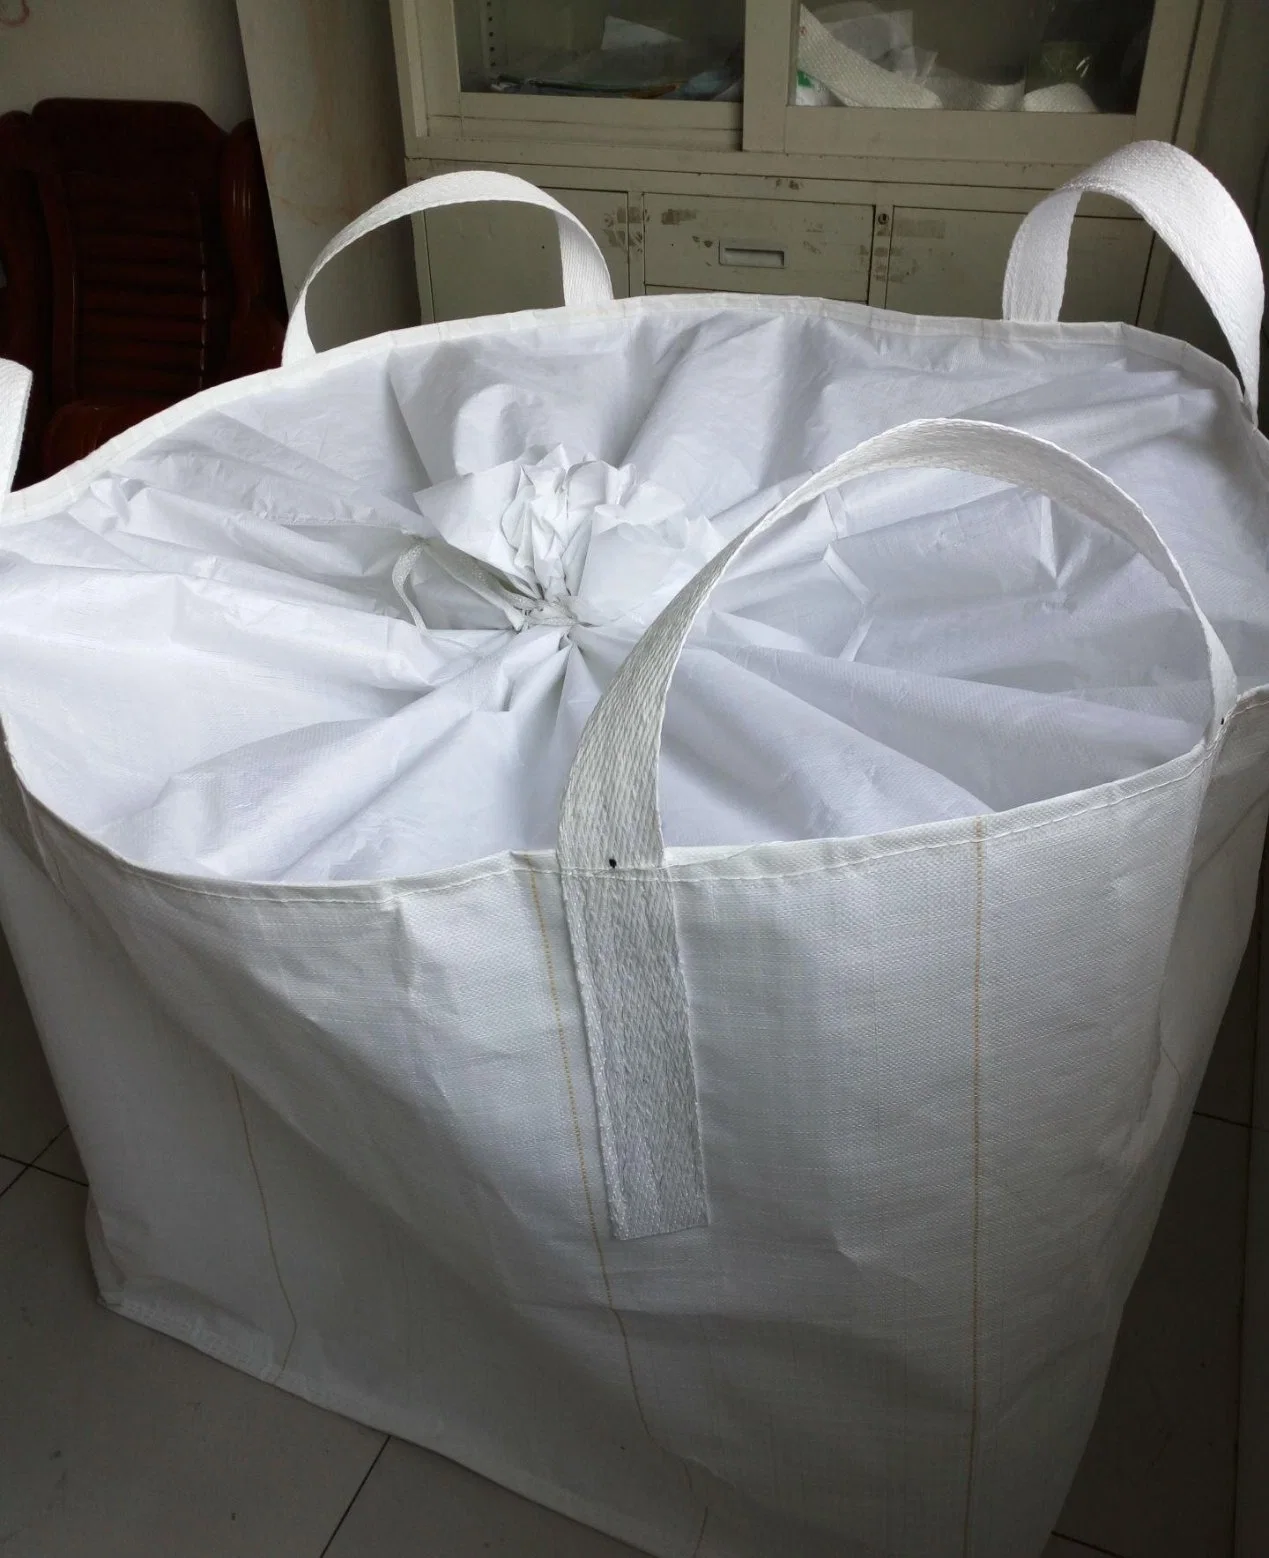 1 Ton Jumbo Bag/Big Bag/FIBC Bag/Bulk Bag 1000kg 1500kg 2000kg Baffle Q-Bag Conductive Big Bags Anti Static Bags Plastic Super Sack